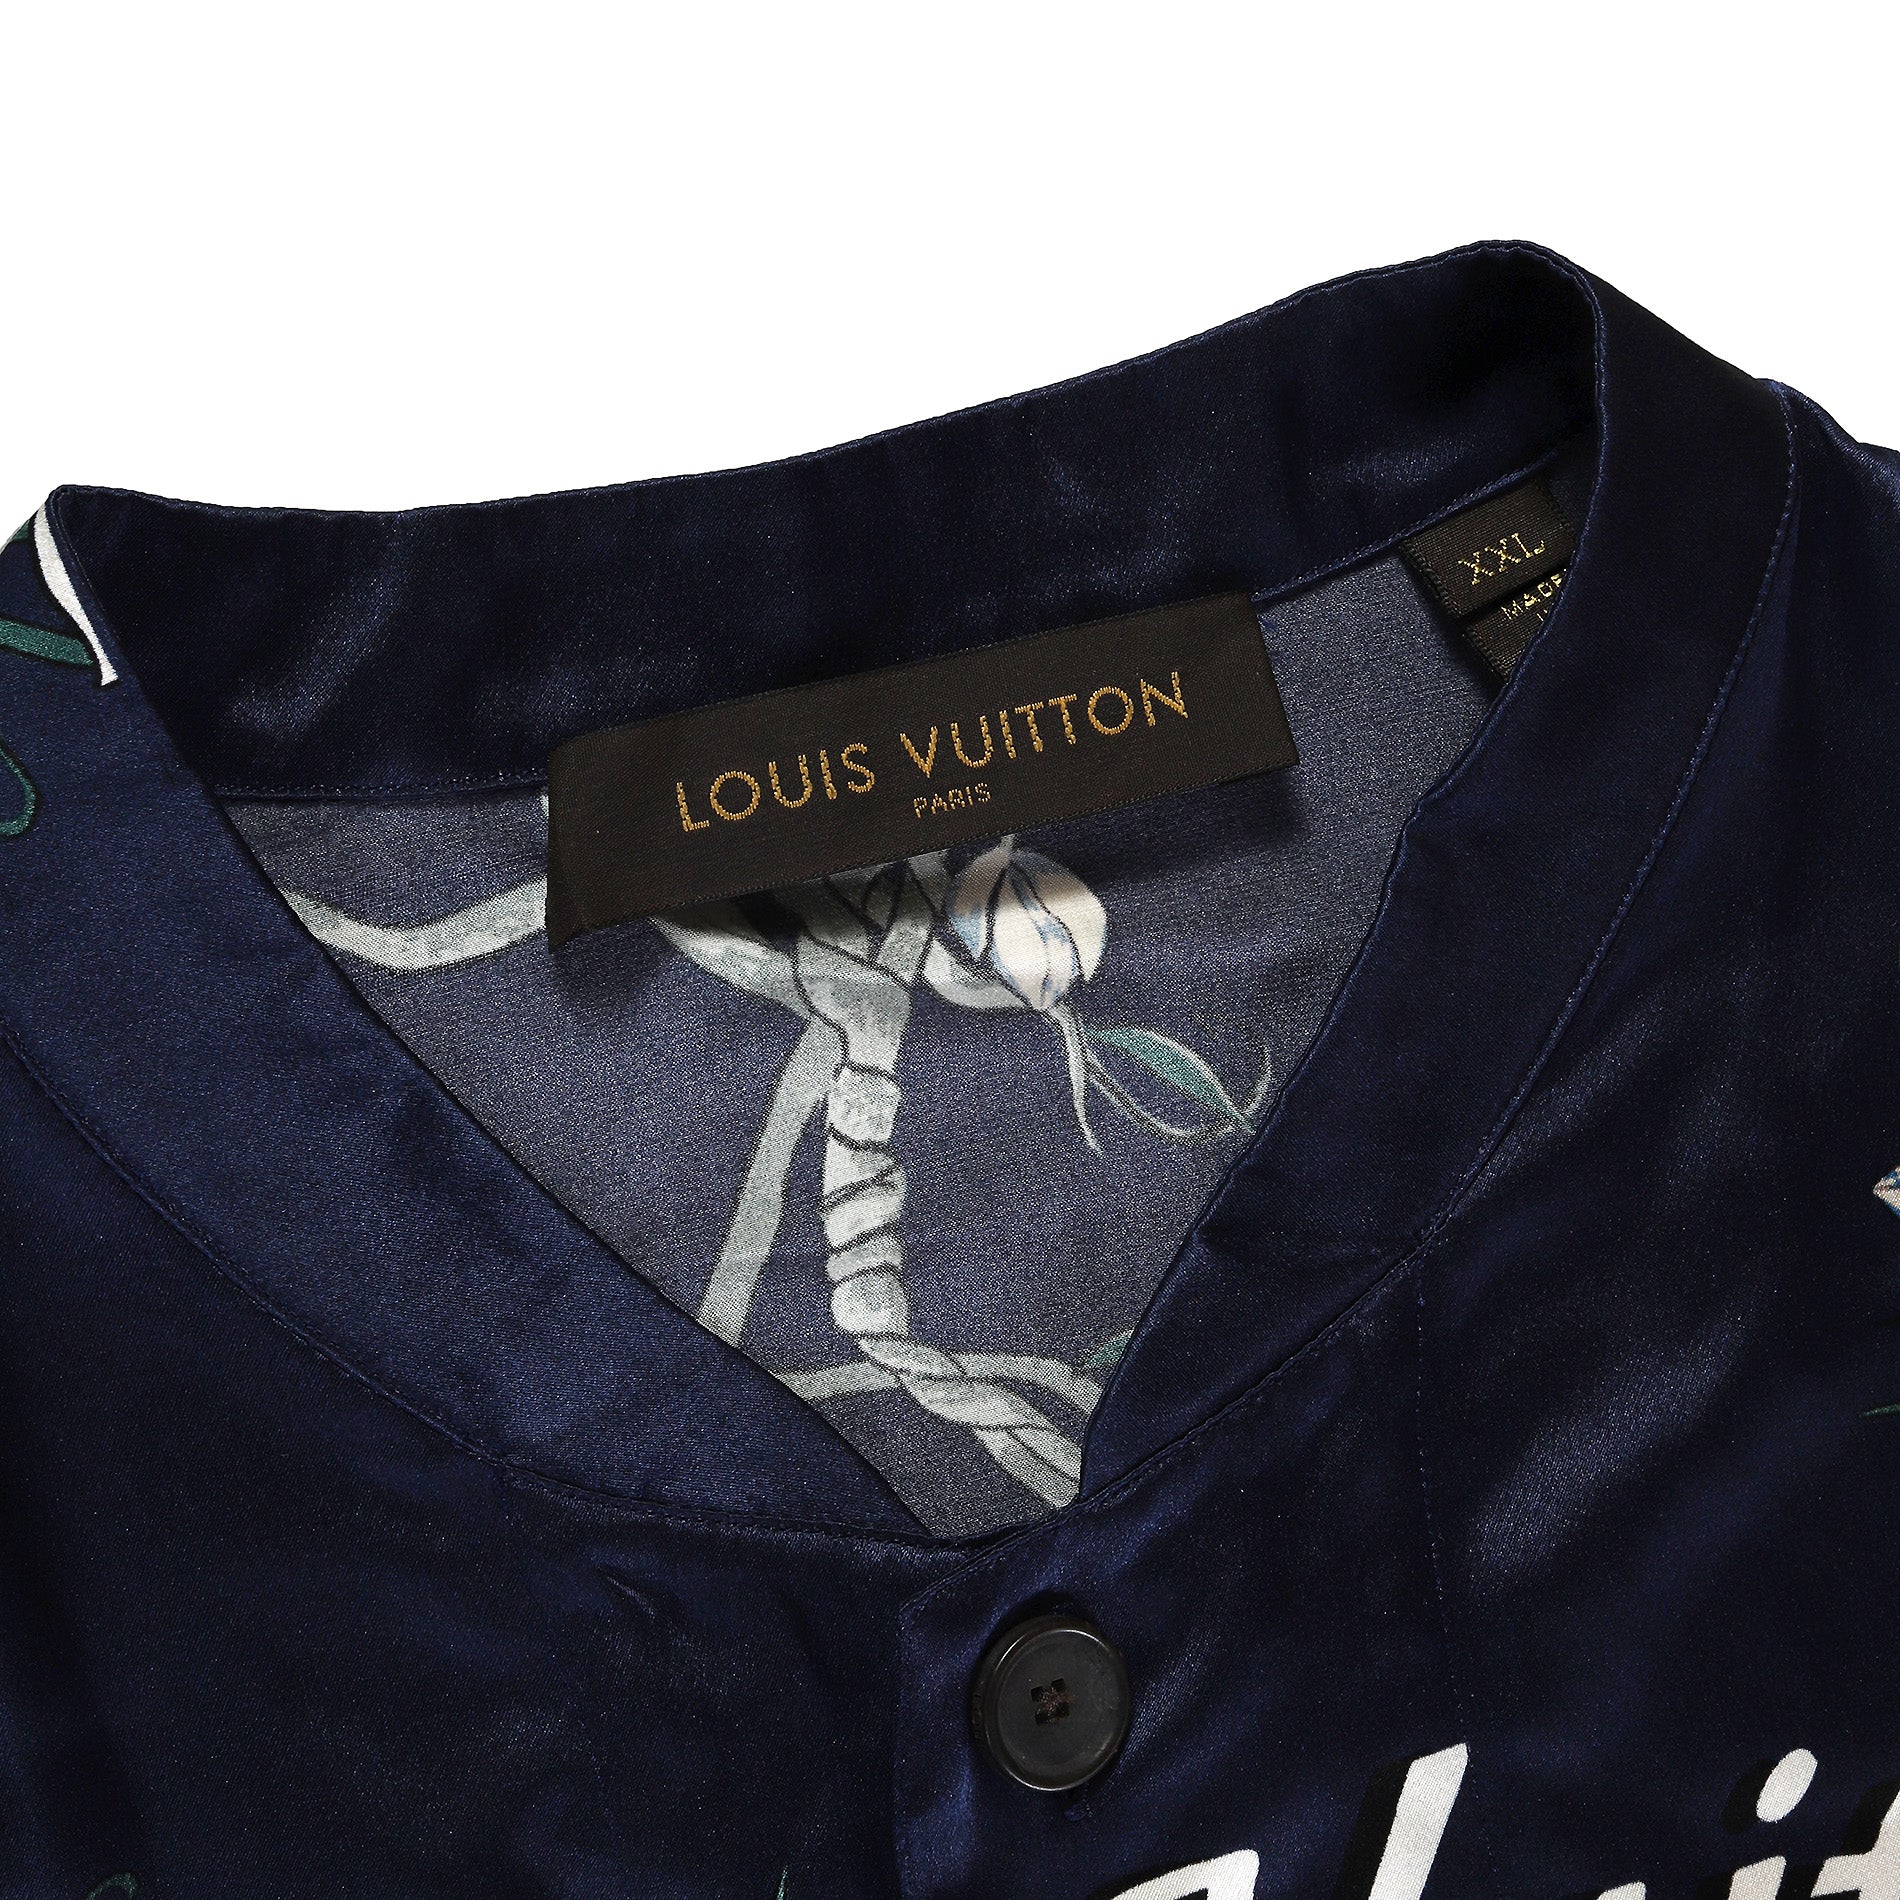 Louis Vuitton, Tops, Louis Vuitton Pajamas